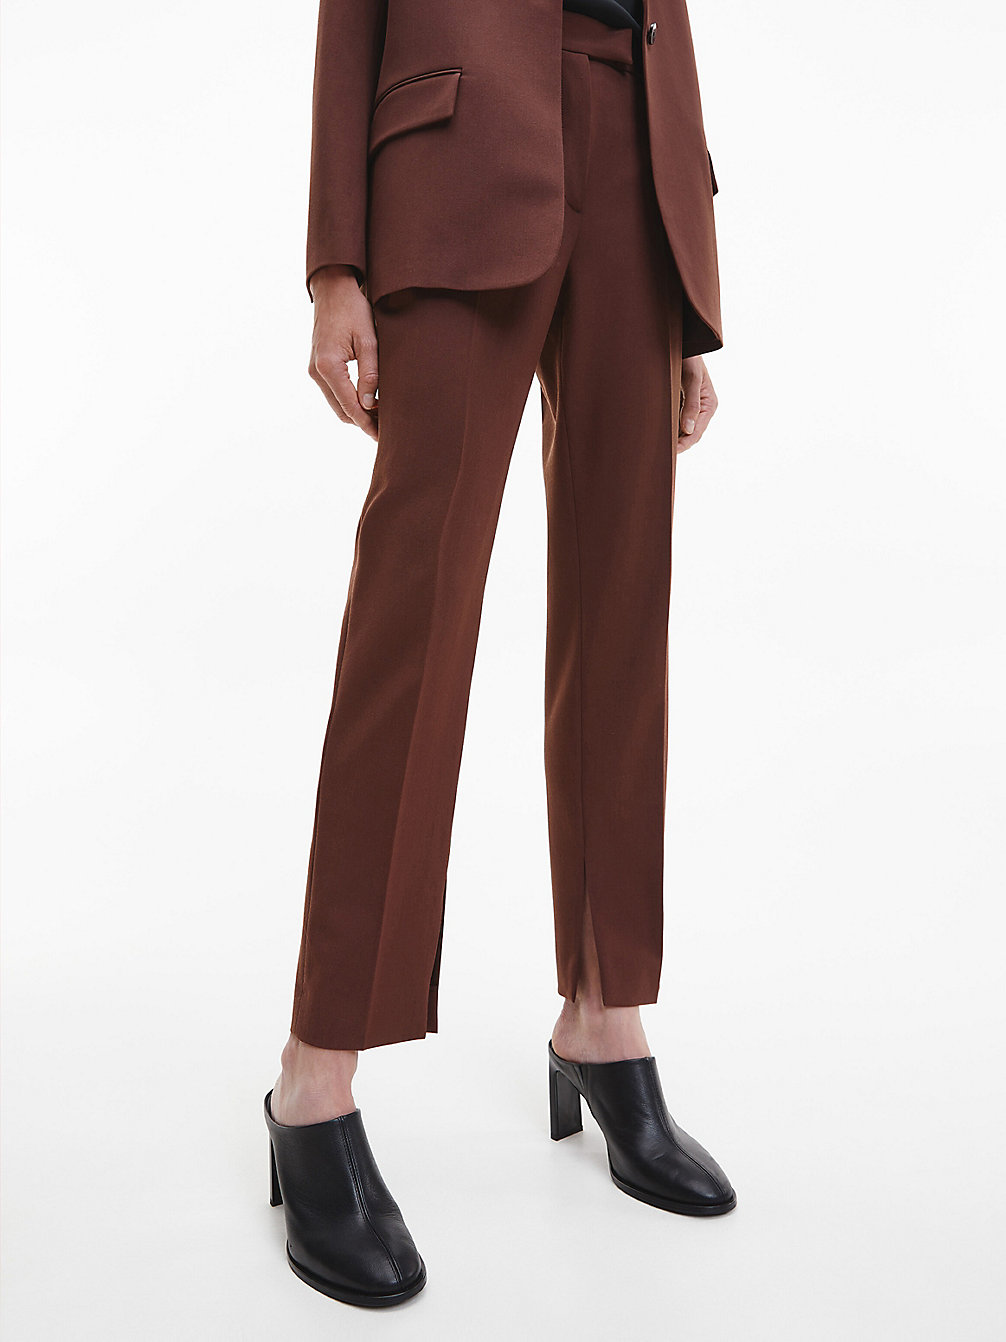 DARK CHESTNUT > Облегающие строгие брюки с разрезом на манжете > undefined Женщины - Calvin Klein